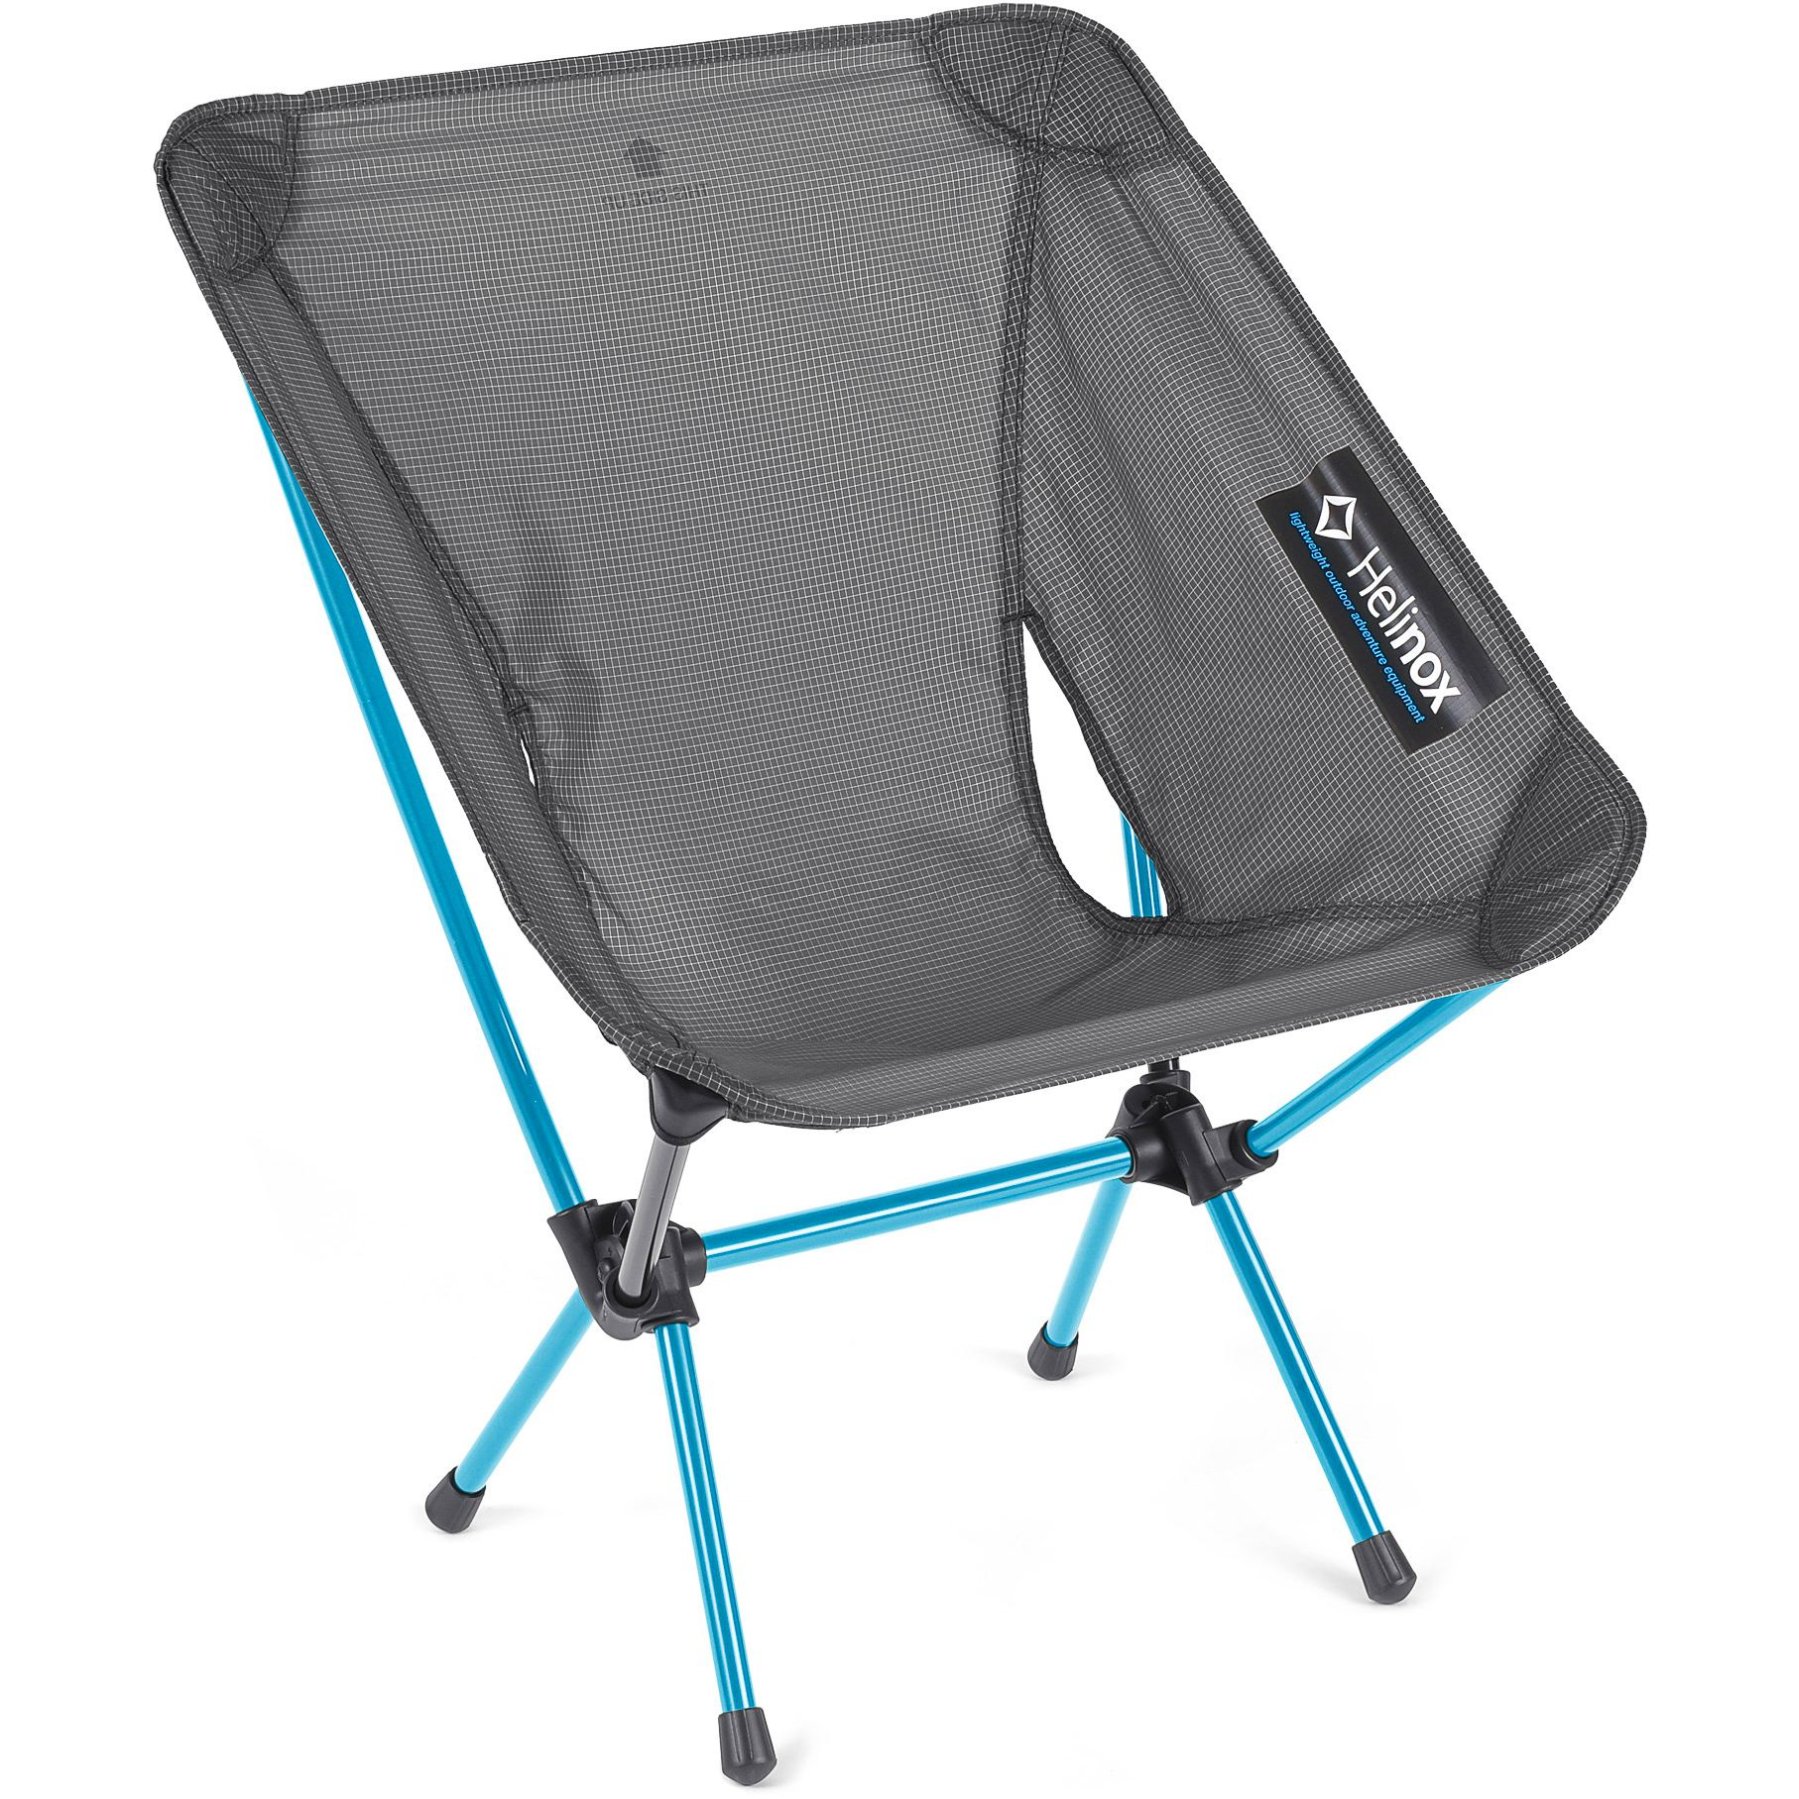 Productfoto van Helinox Chair Zero L - Campingstoel - Zwart / Cyan Blue